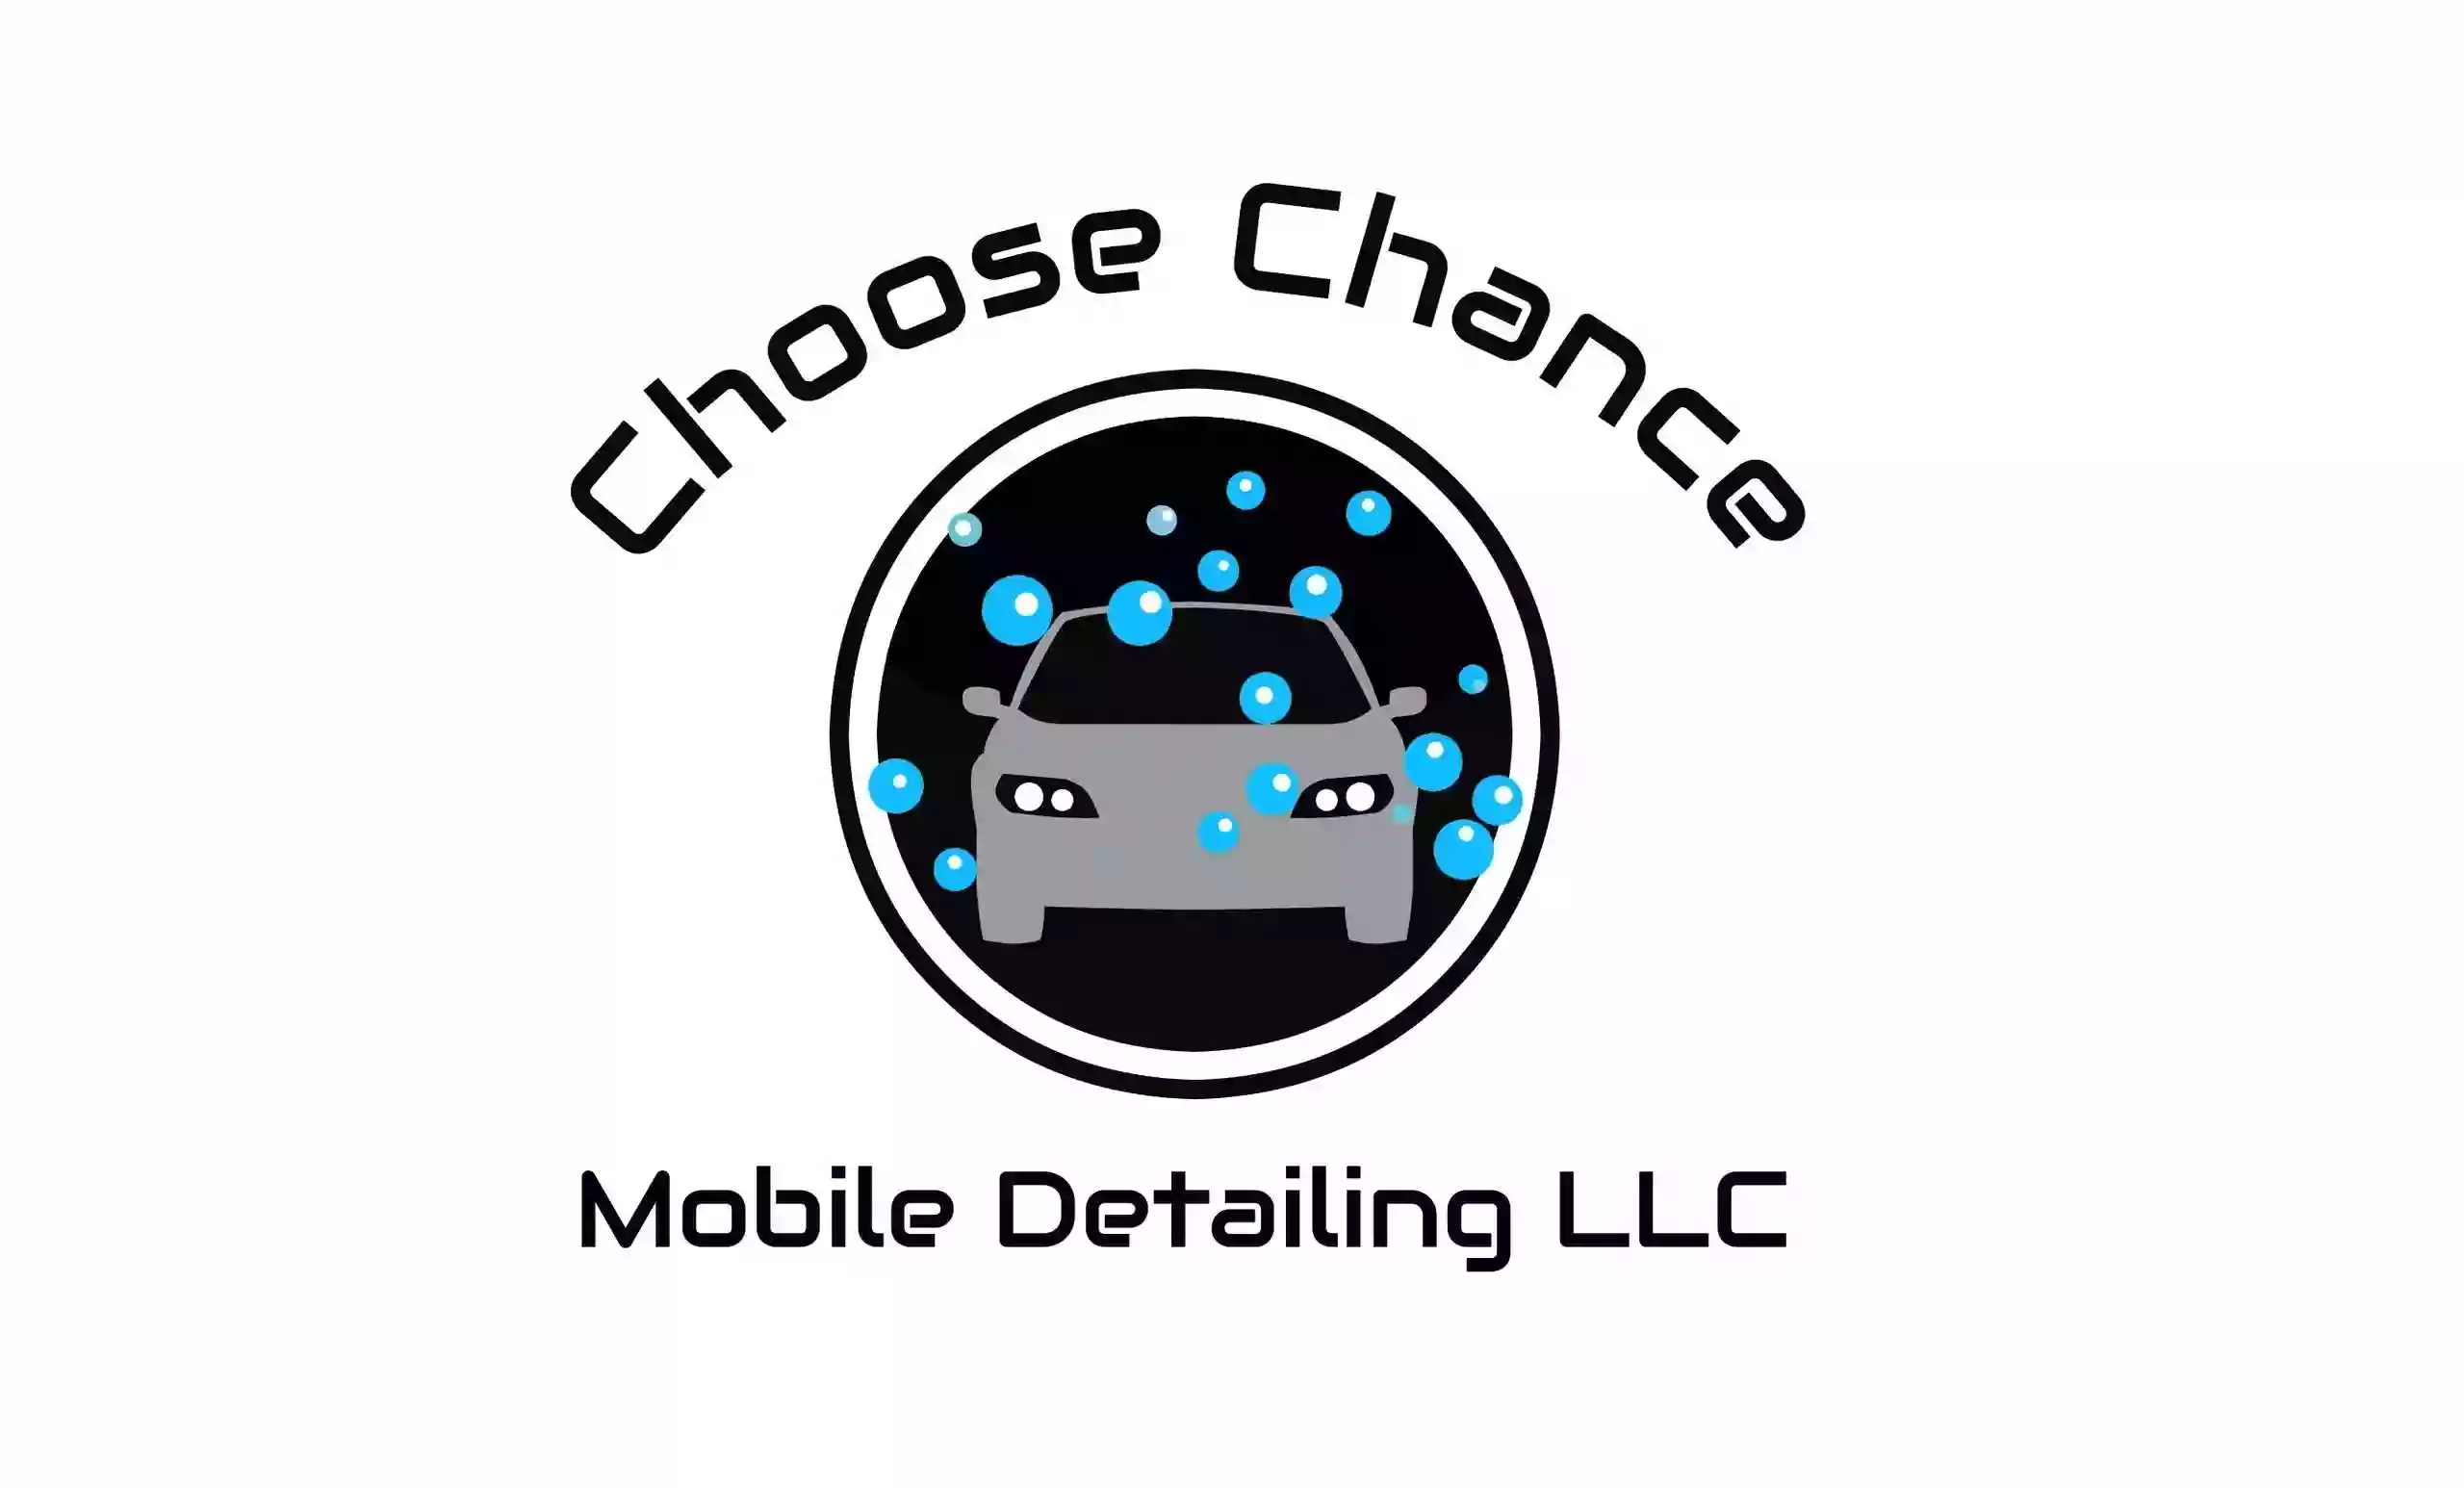 Choose Chance Mobile Detailing LLC